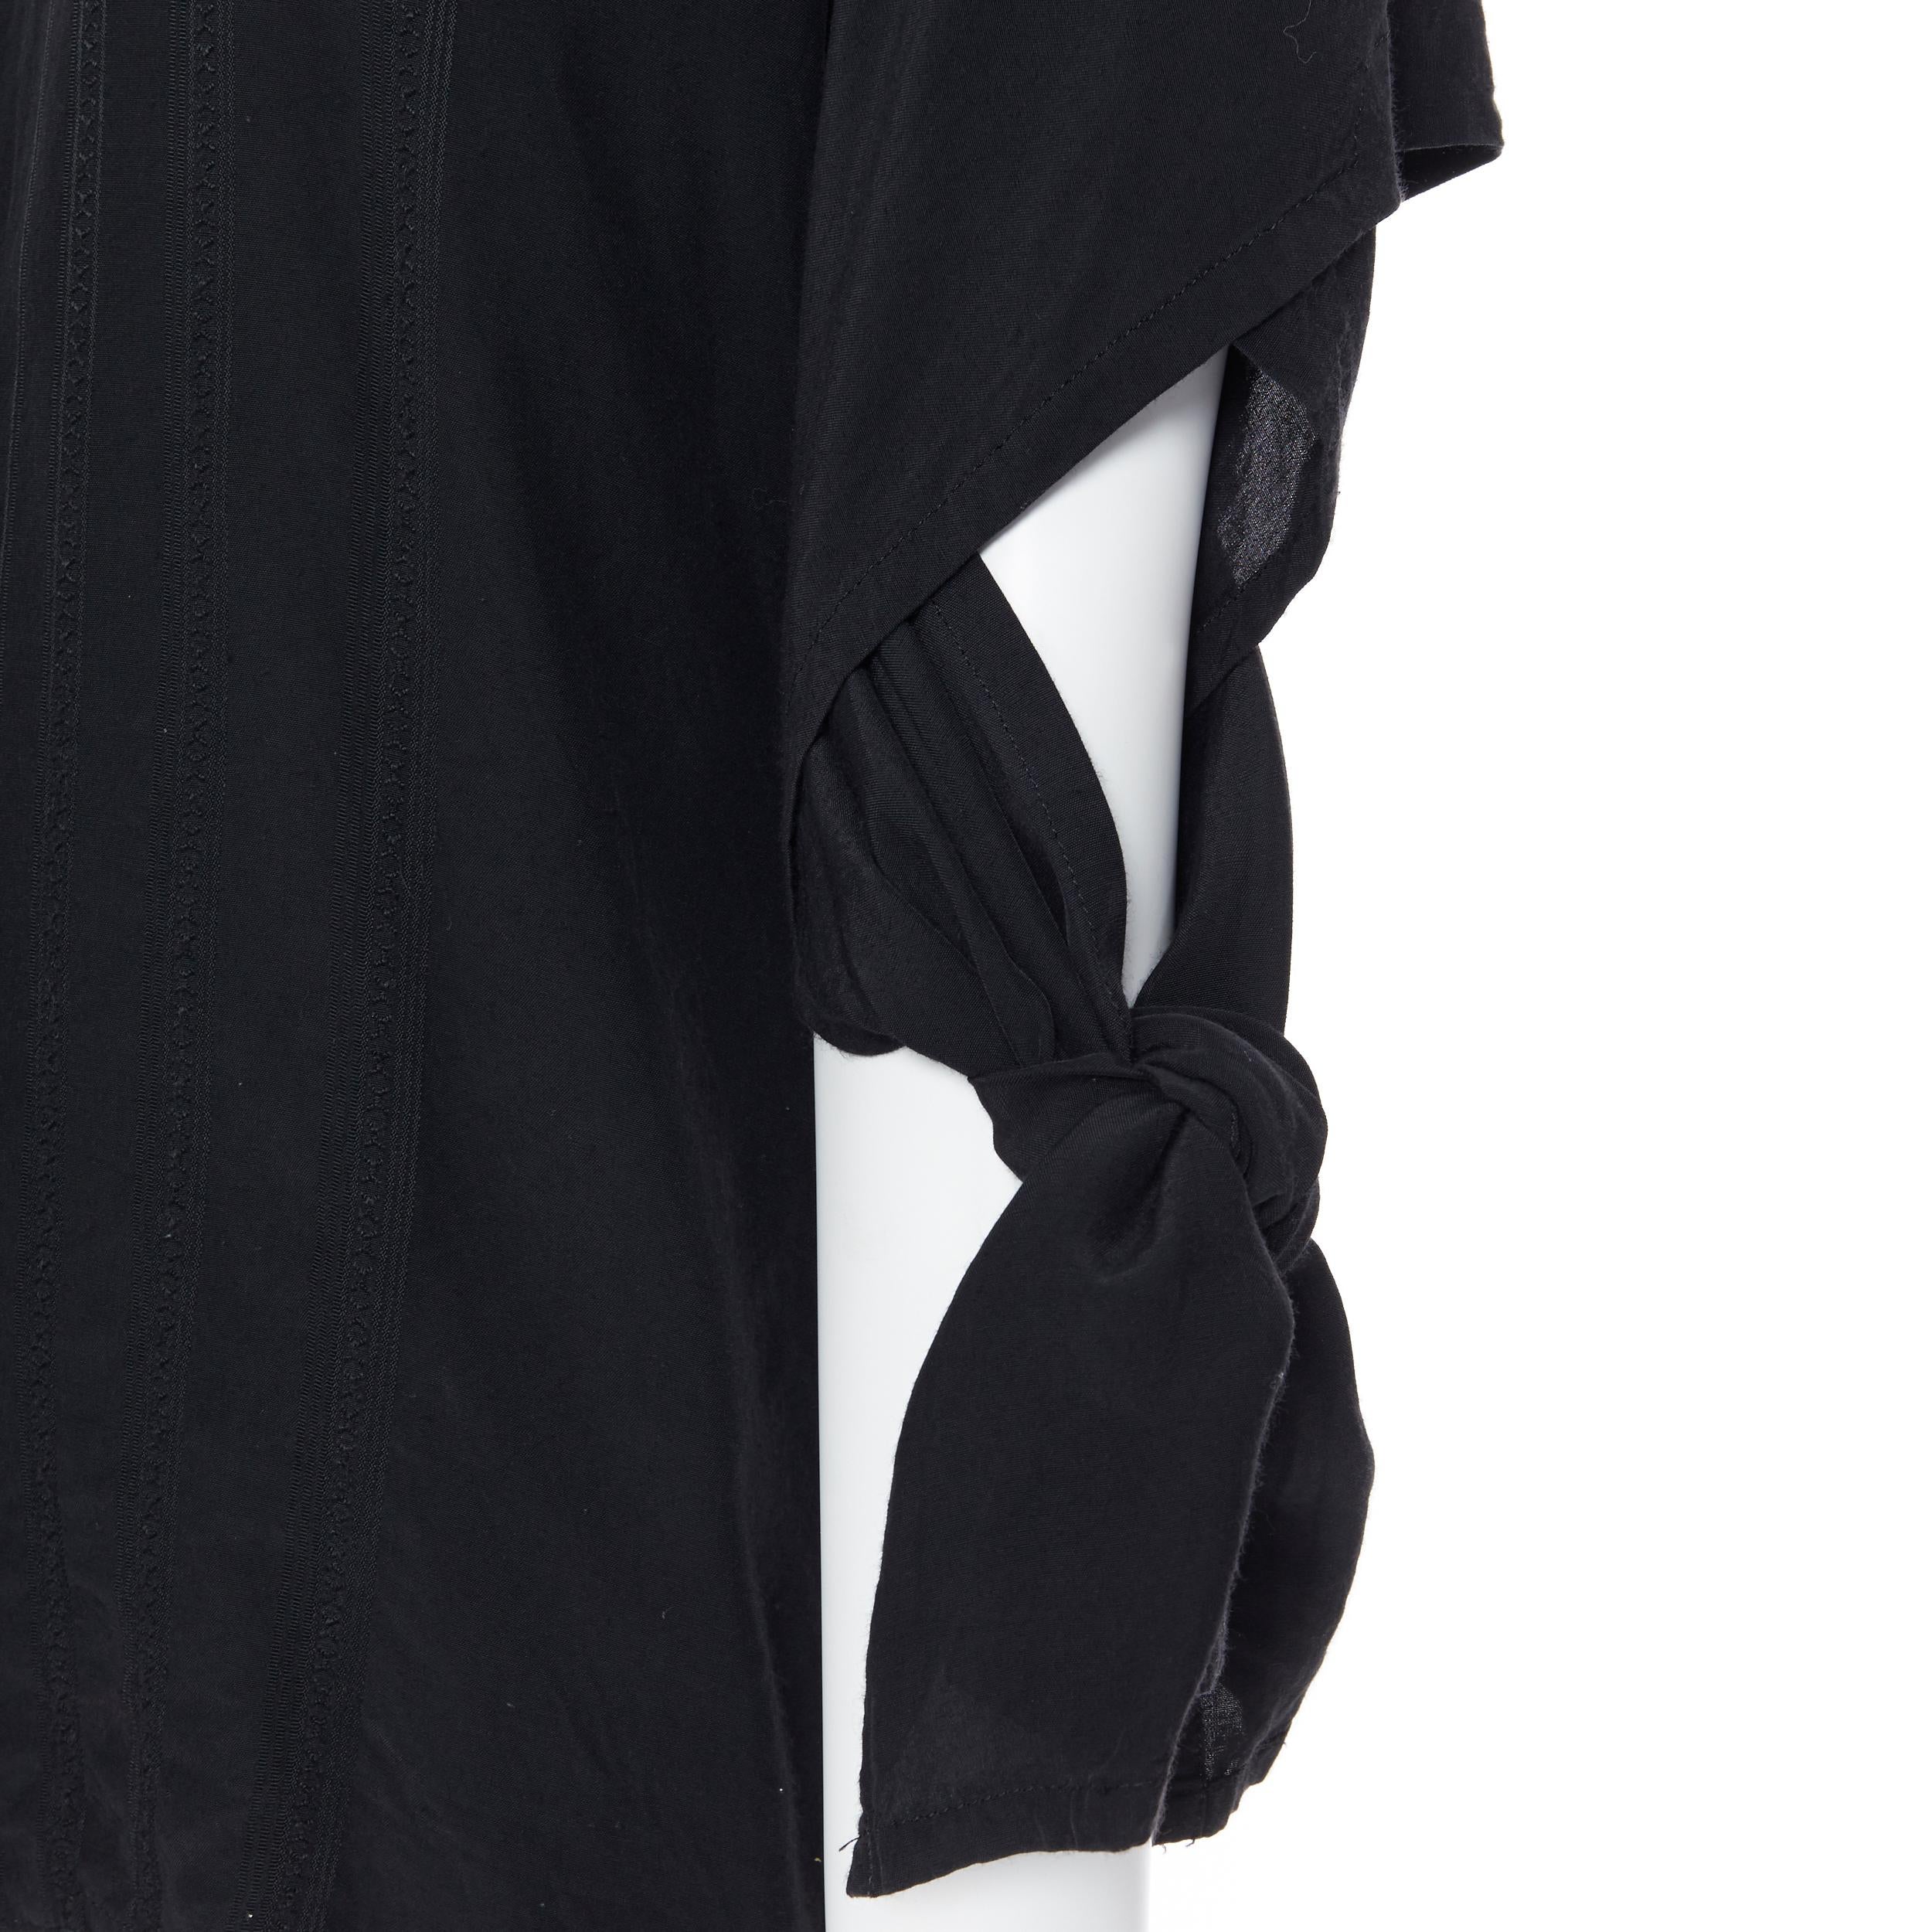 vintage COMME DES GARCONS 1989 black stripe tie arm band asymmetric top S
Brand: Comme Des Garcons
Designer: Rei Kawakubo
Collection: 1989
Model Name / Style: Asymmetric top
Material: Rayon
Color: Black
Pattern: Solid
Closure: Button
Extra Detail: